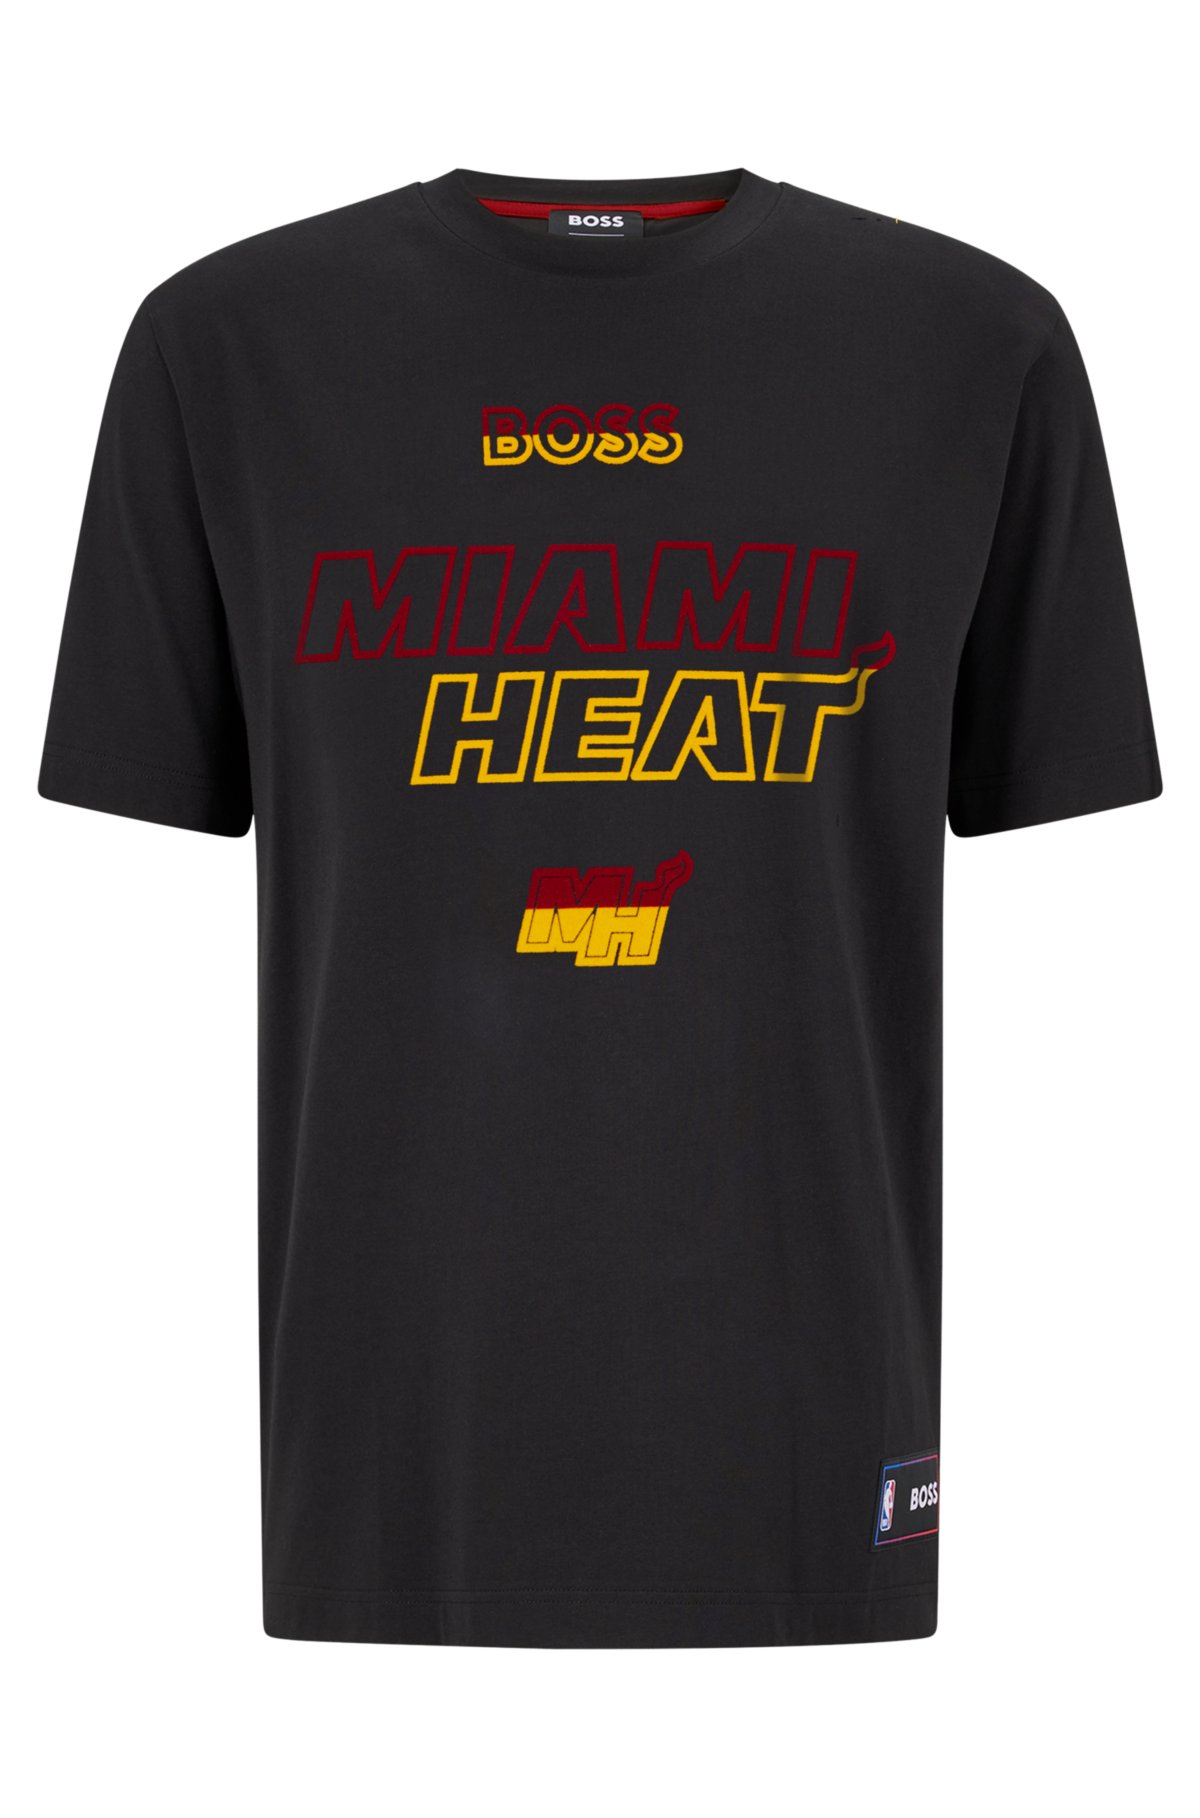 Miami Heat NBA crop top - T-shirts - CLOTHING - Woman 